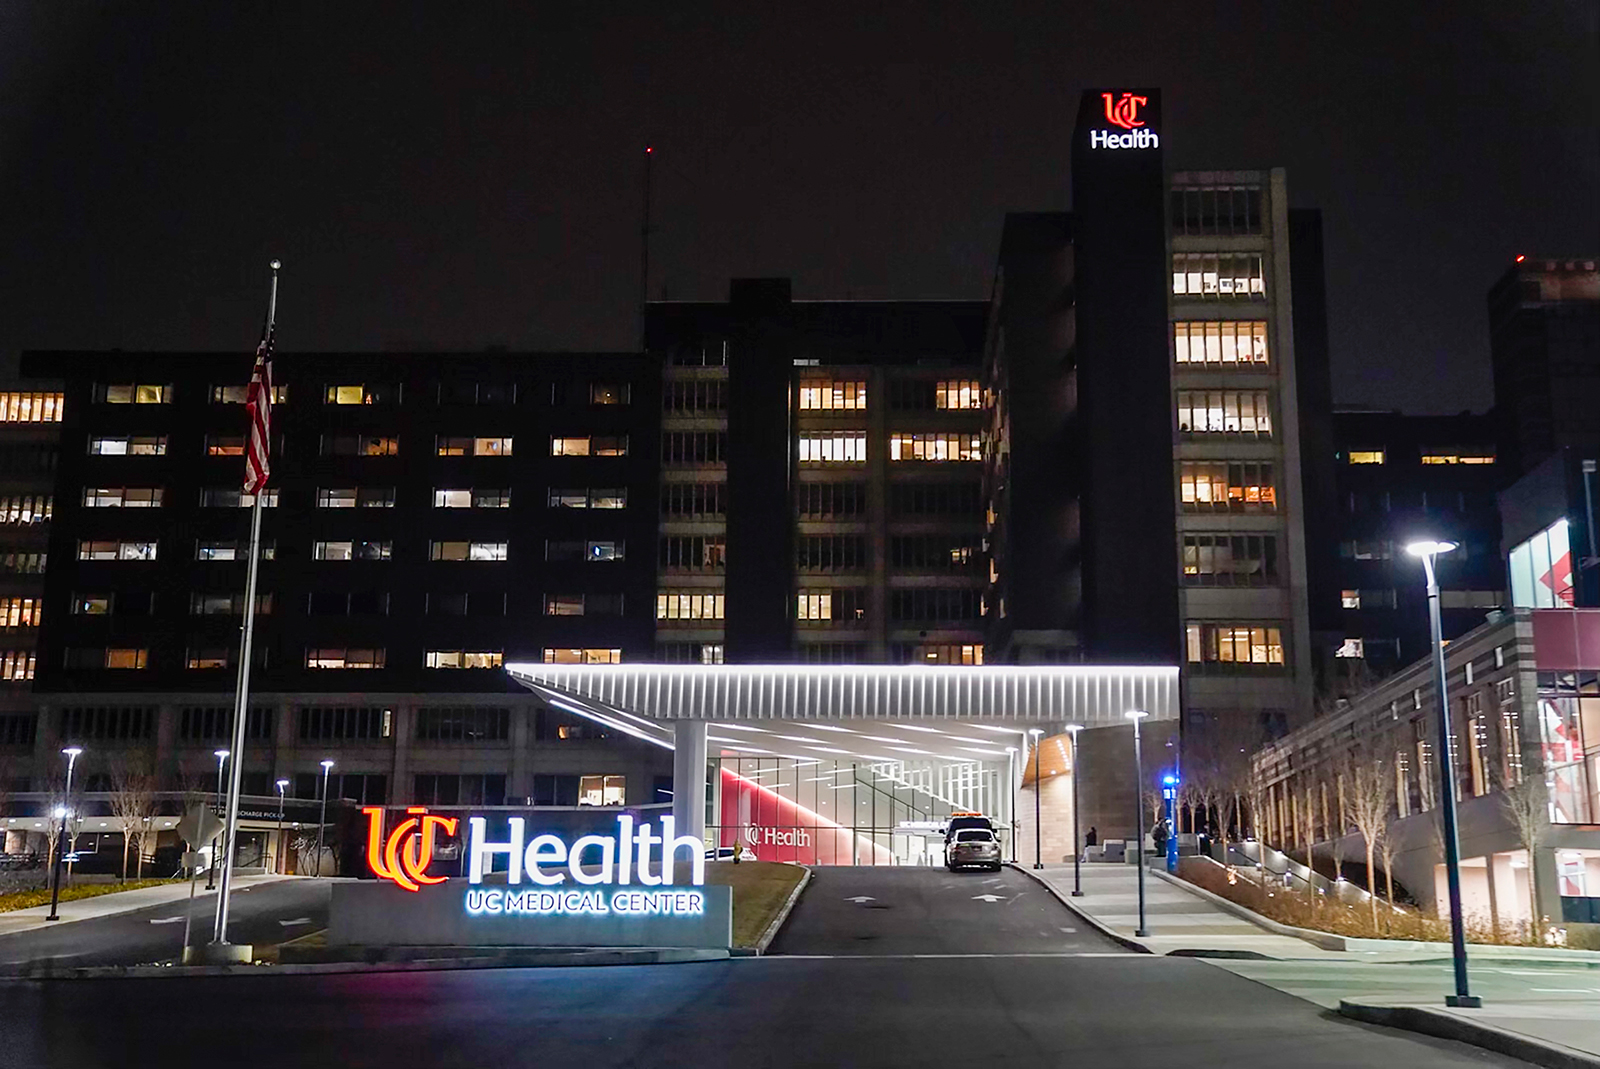 University of Cincinnati Medical Center is seen in Cincinnati on Monday, January 2.